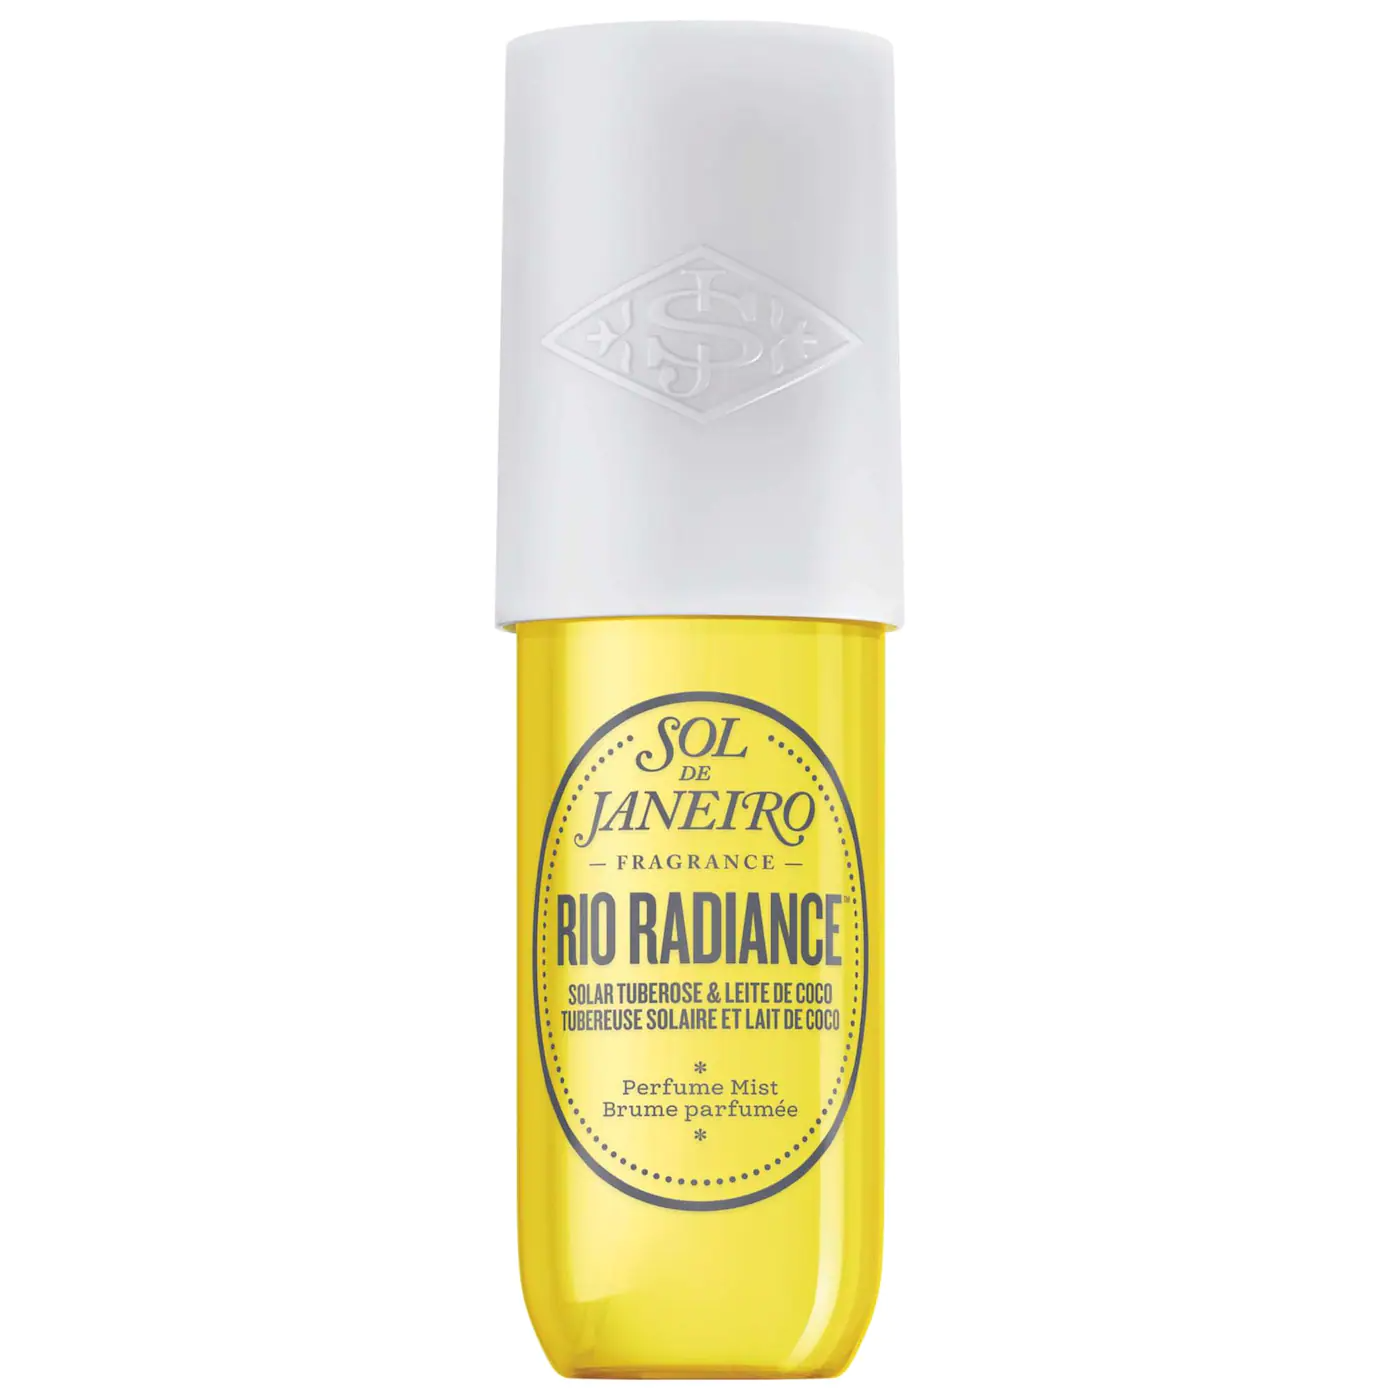 SOL DE JANEIRO Rio Radiance Perfume Mist, 90mL